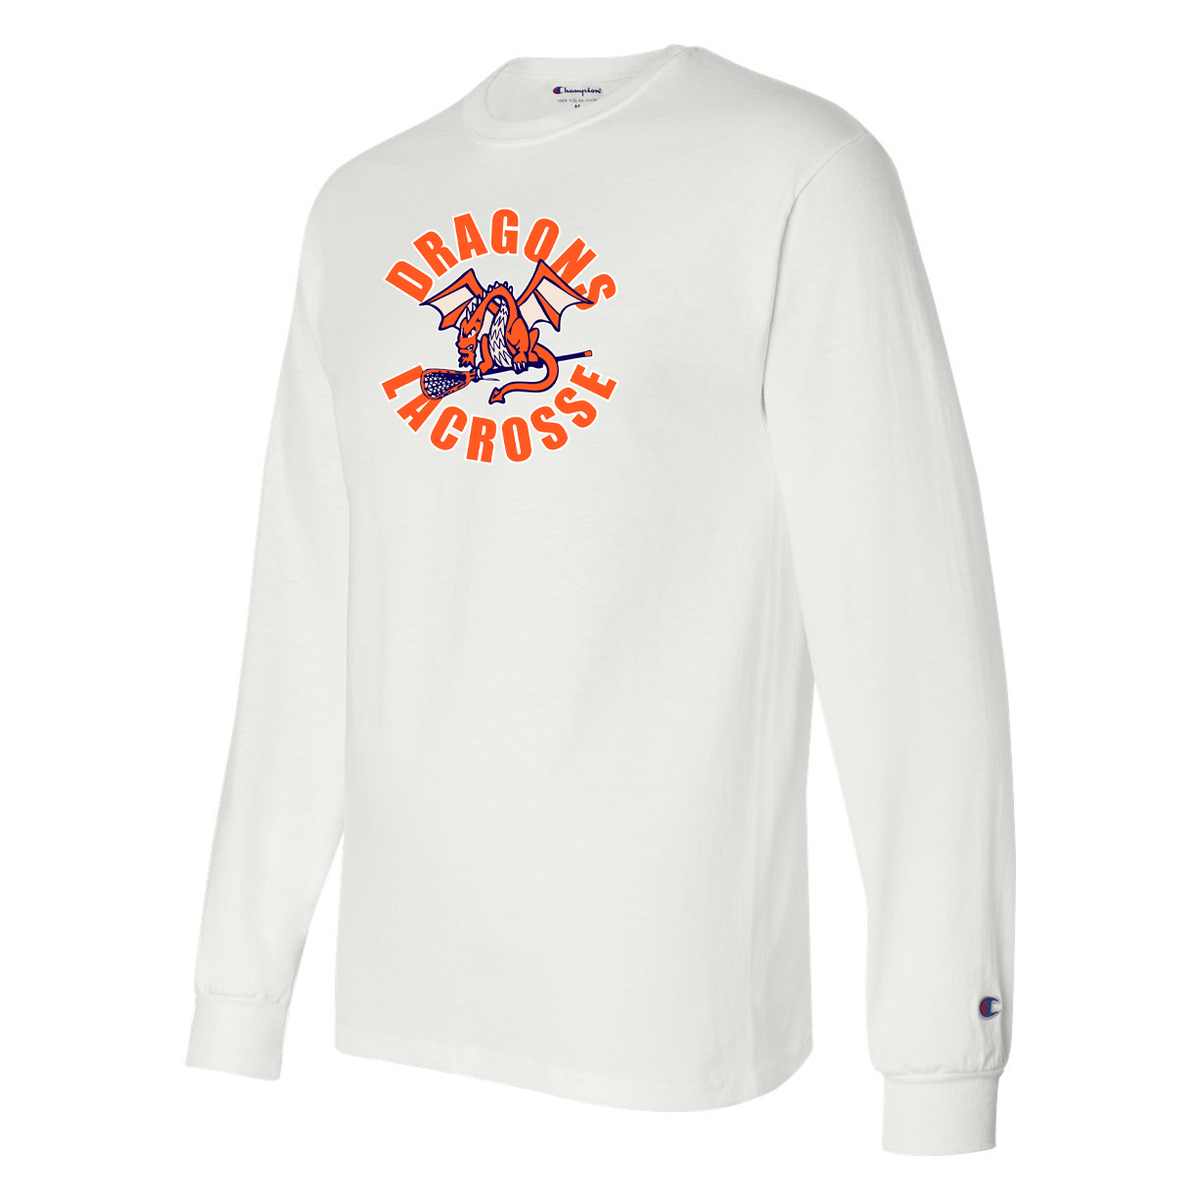 St Petes Dragons Lacrosse Champion Long Sleeve T-Shirt